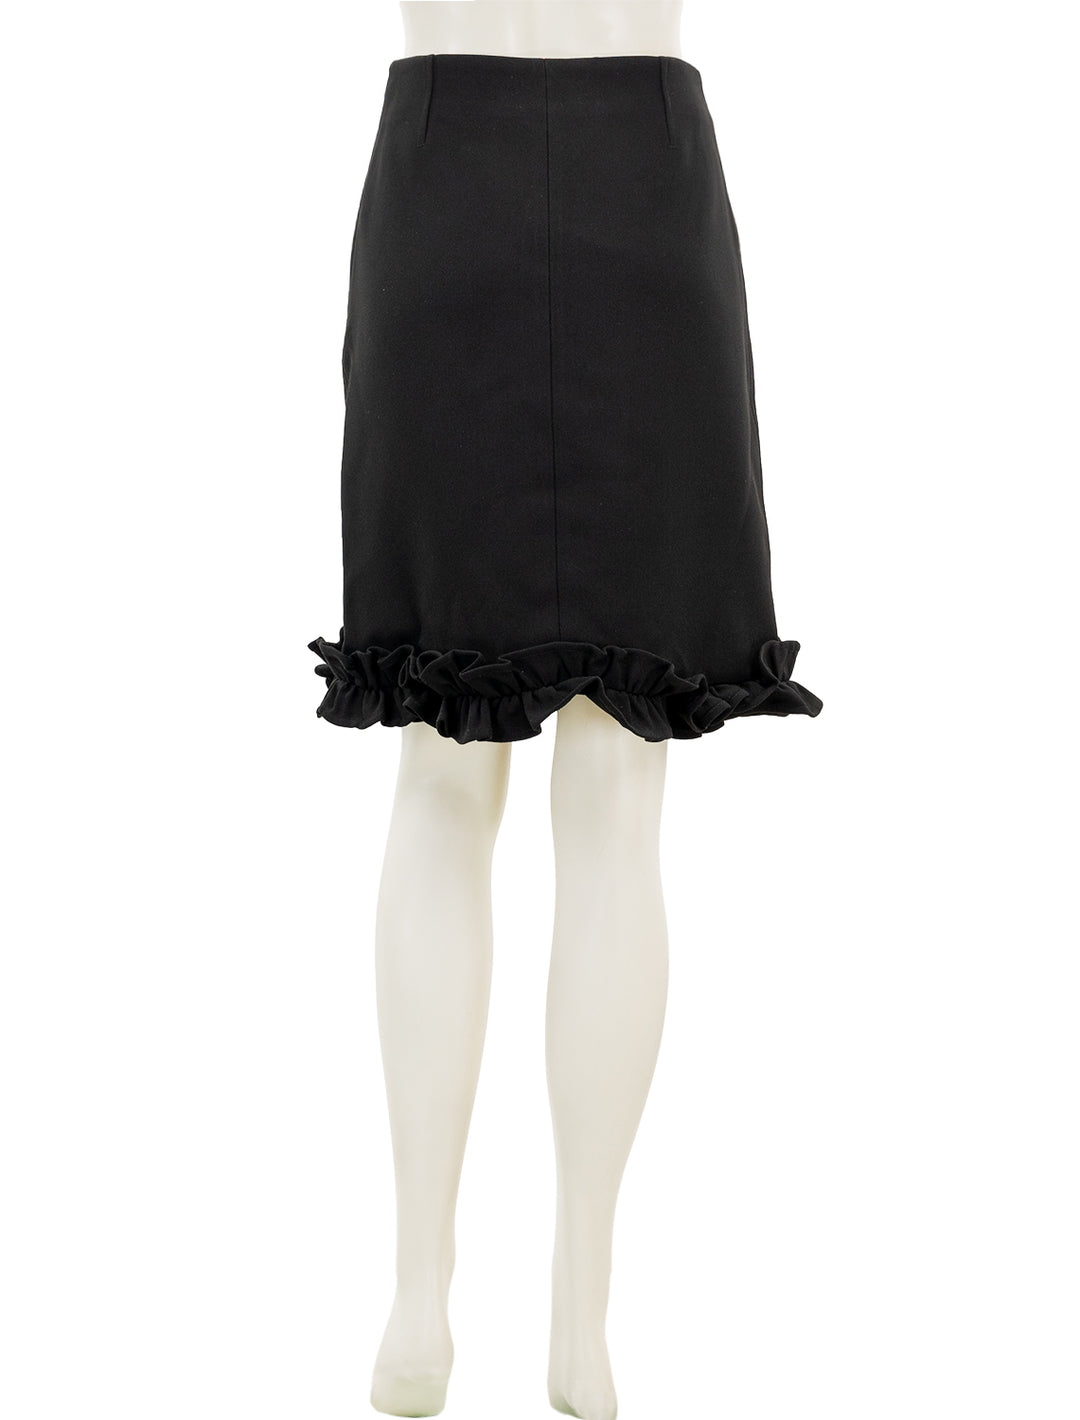 Back view of GANNI's bonded crepe skirt in black.